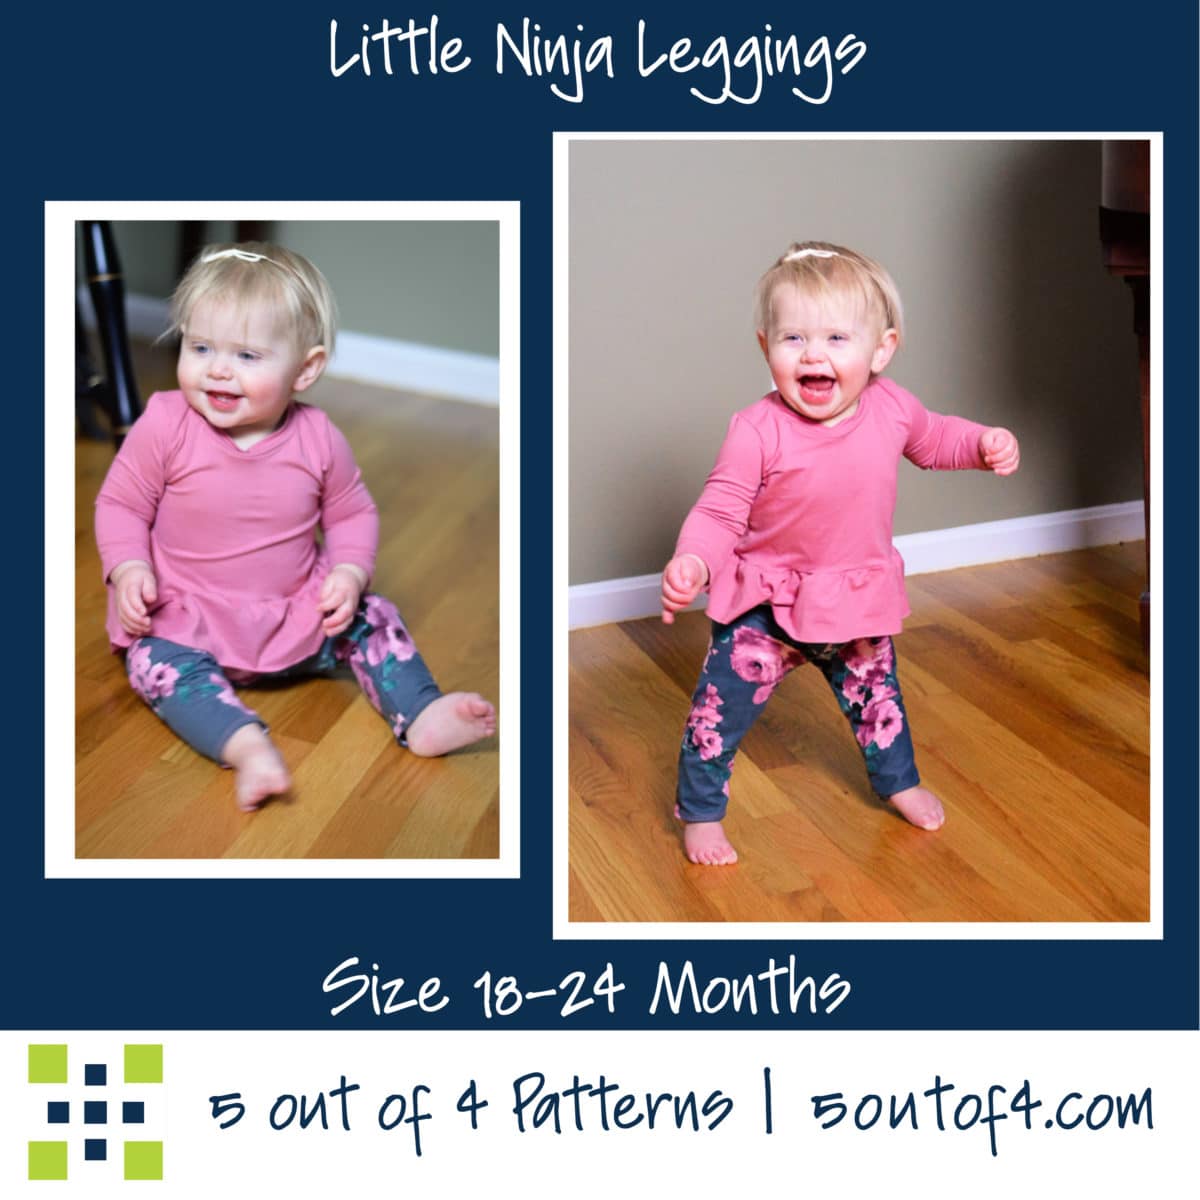 Little Ninja Leggings - 5 out of 4 Patterns